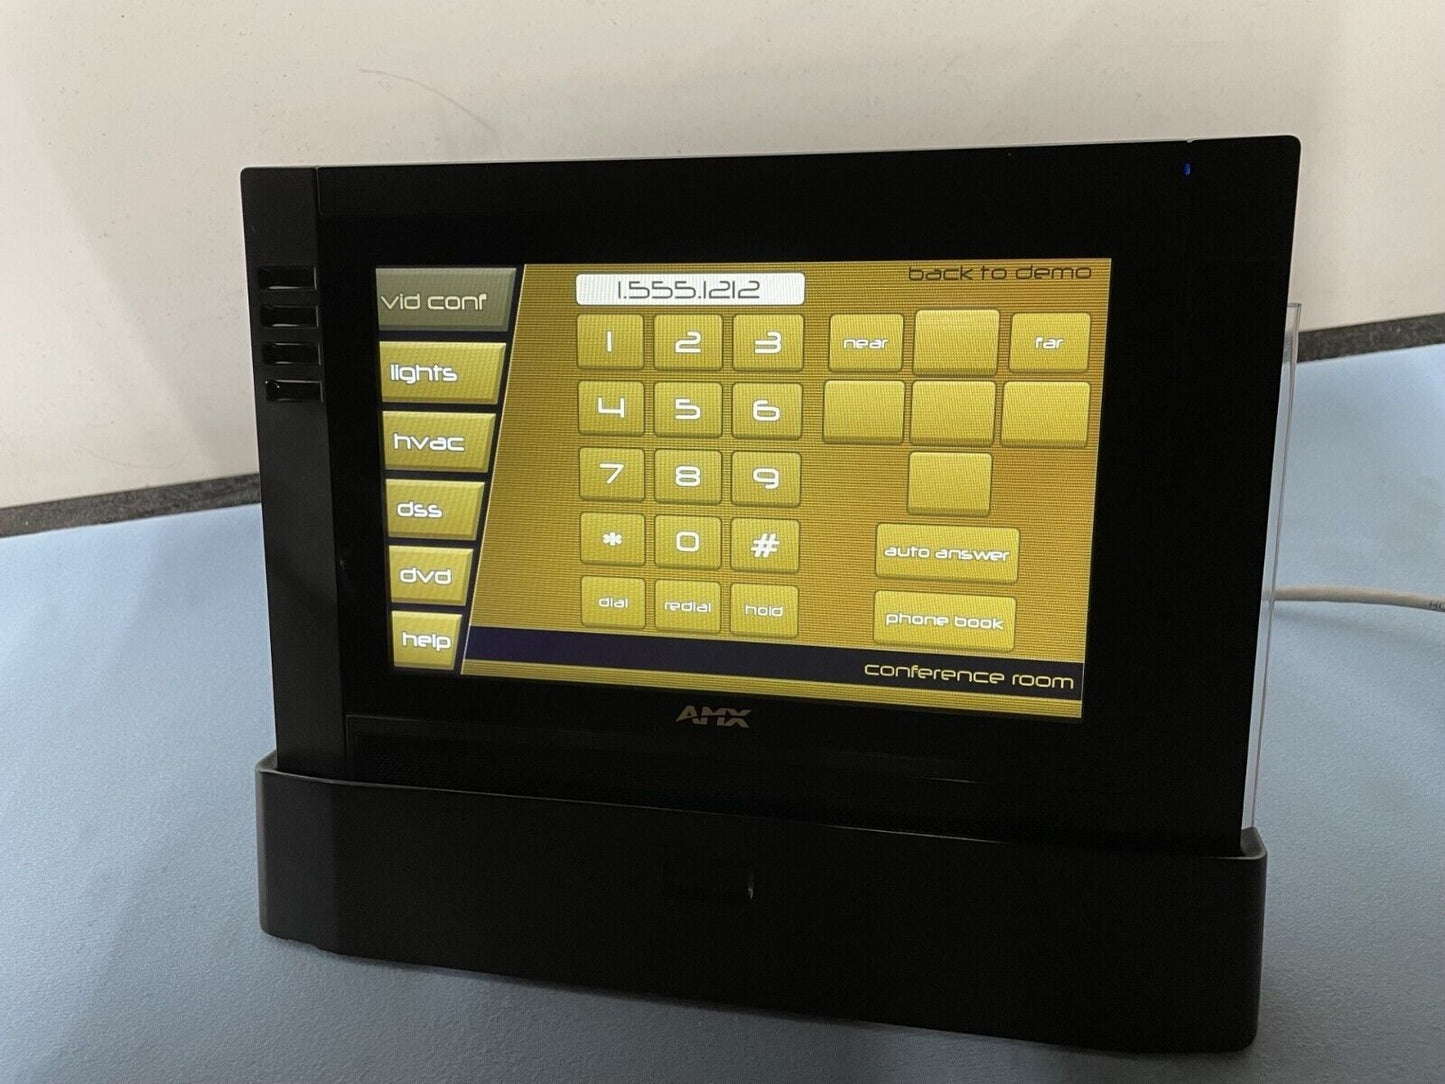 AMX MVP-9000i-GB Wireless Modero ViewPoint 9" Touch Panel w/ Intercom & Wi-Fi